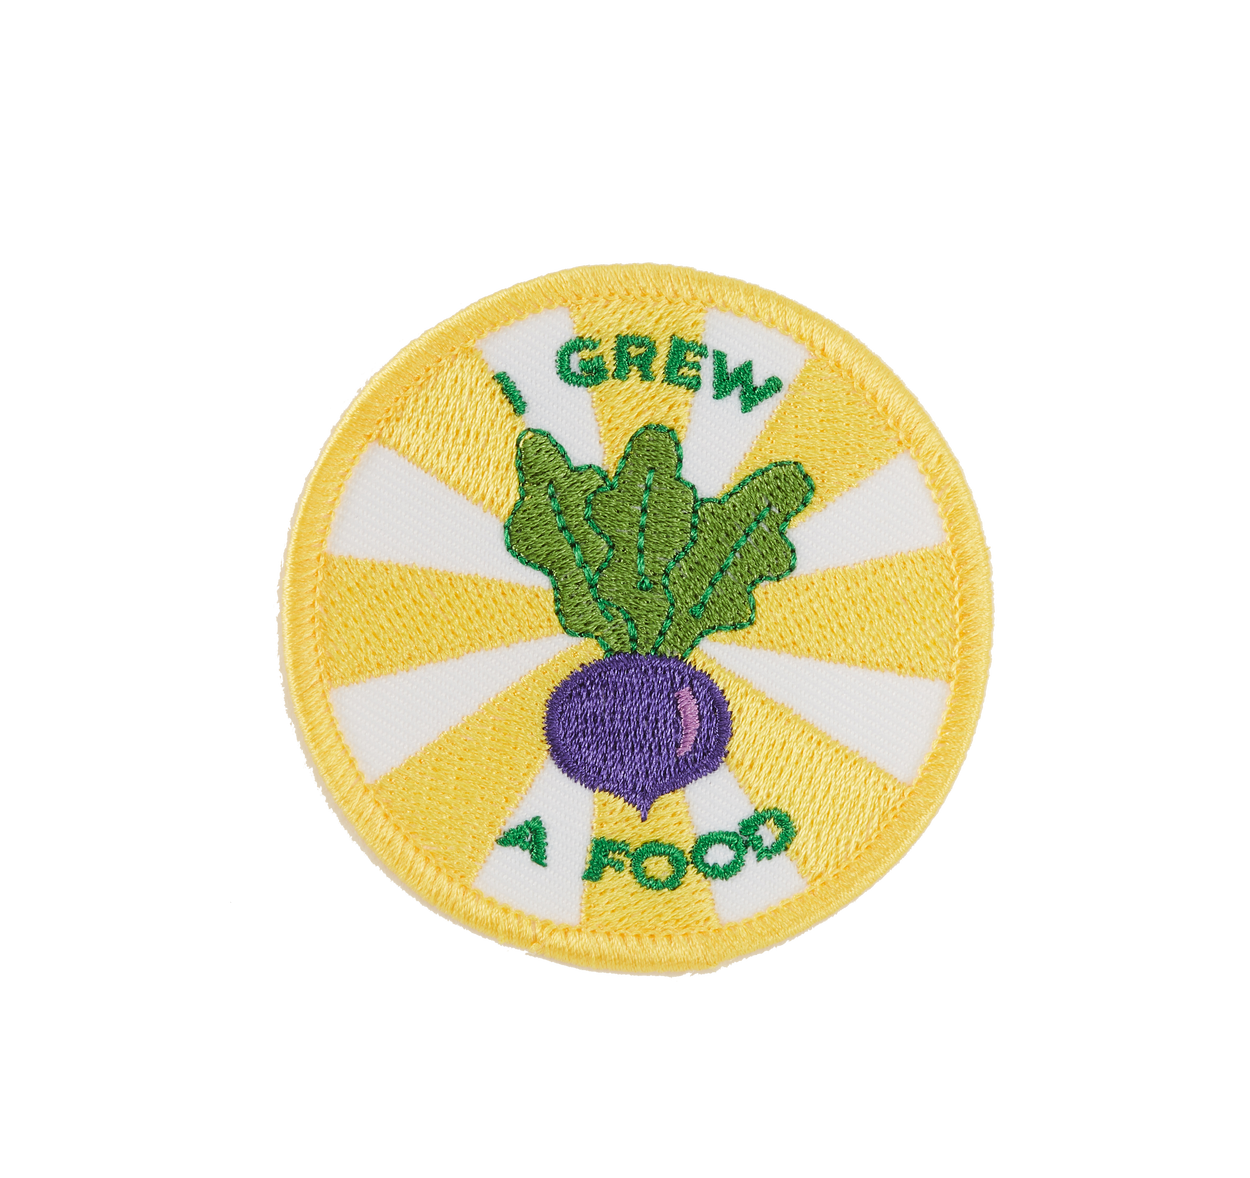 I Grew A Food Badge